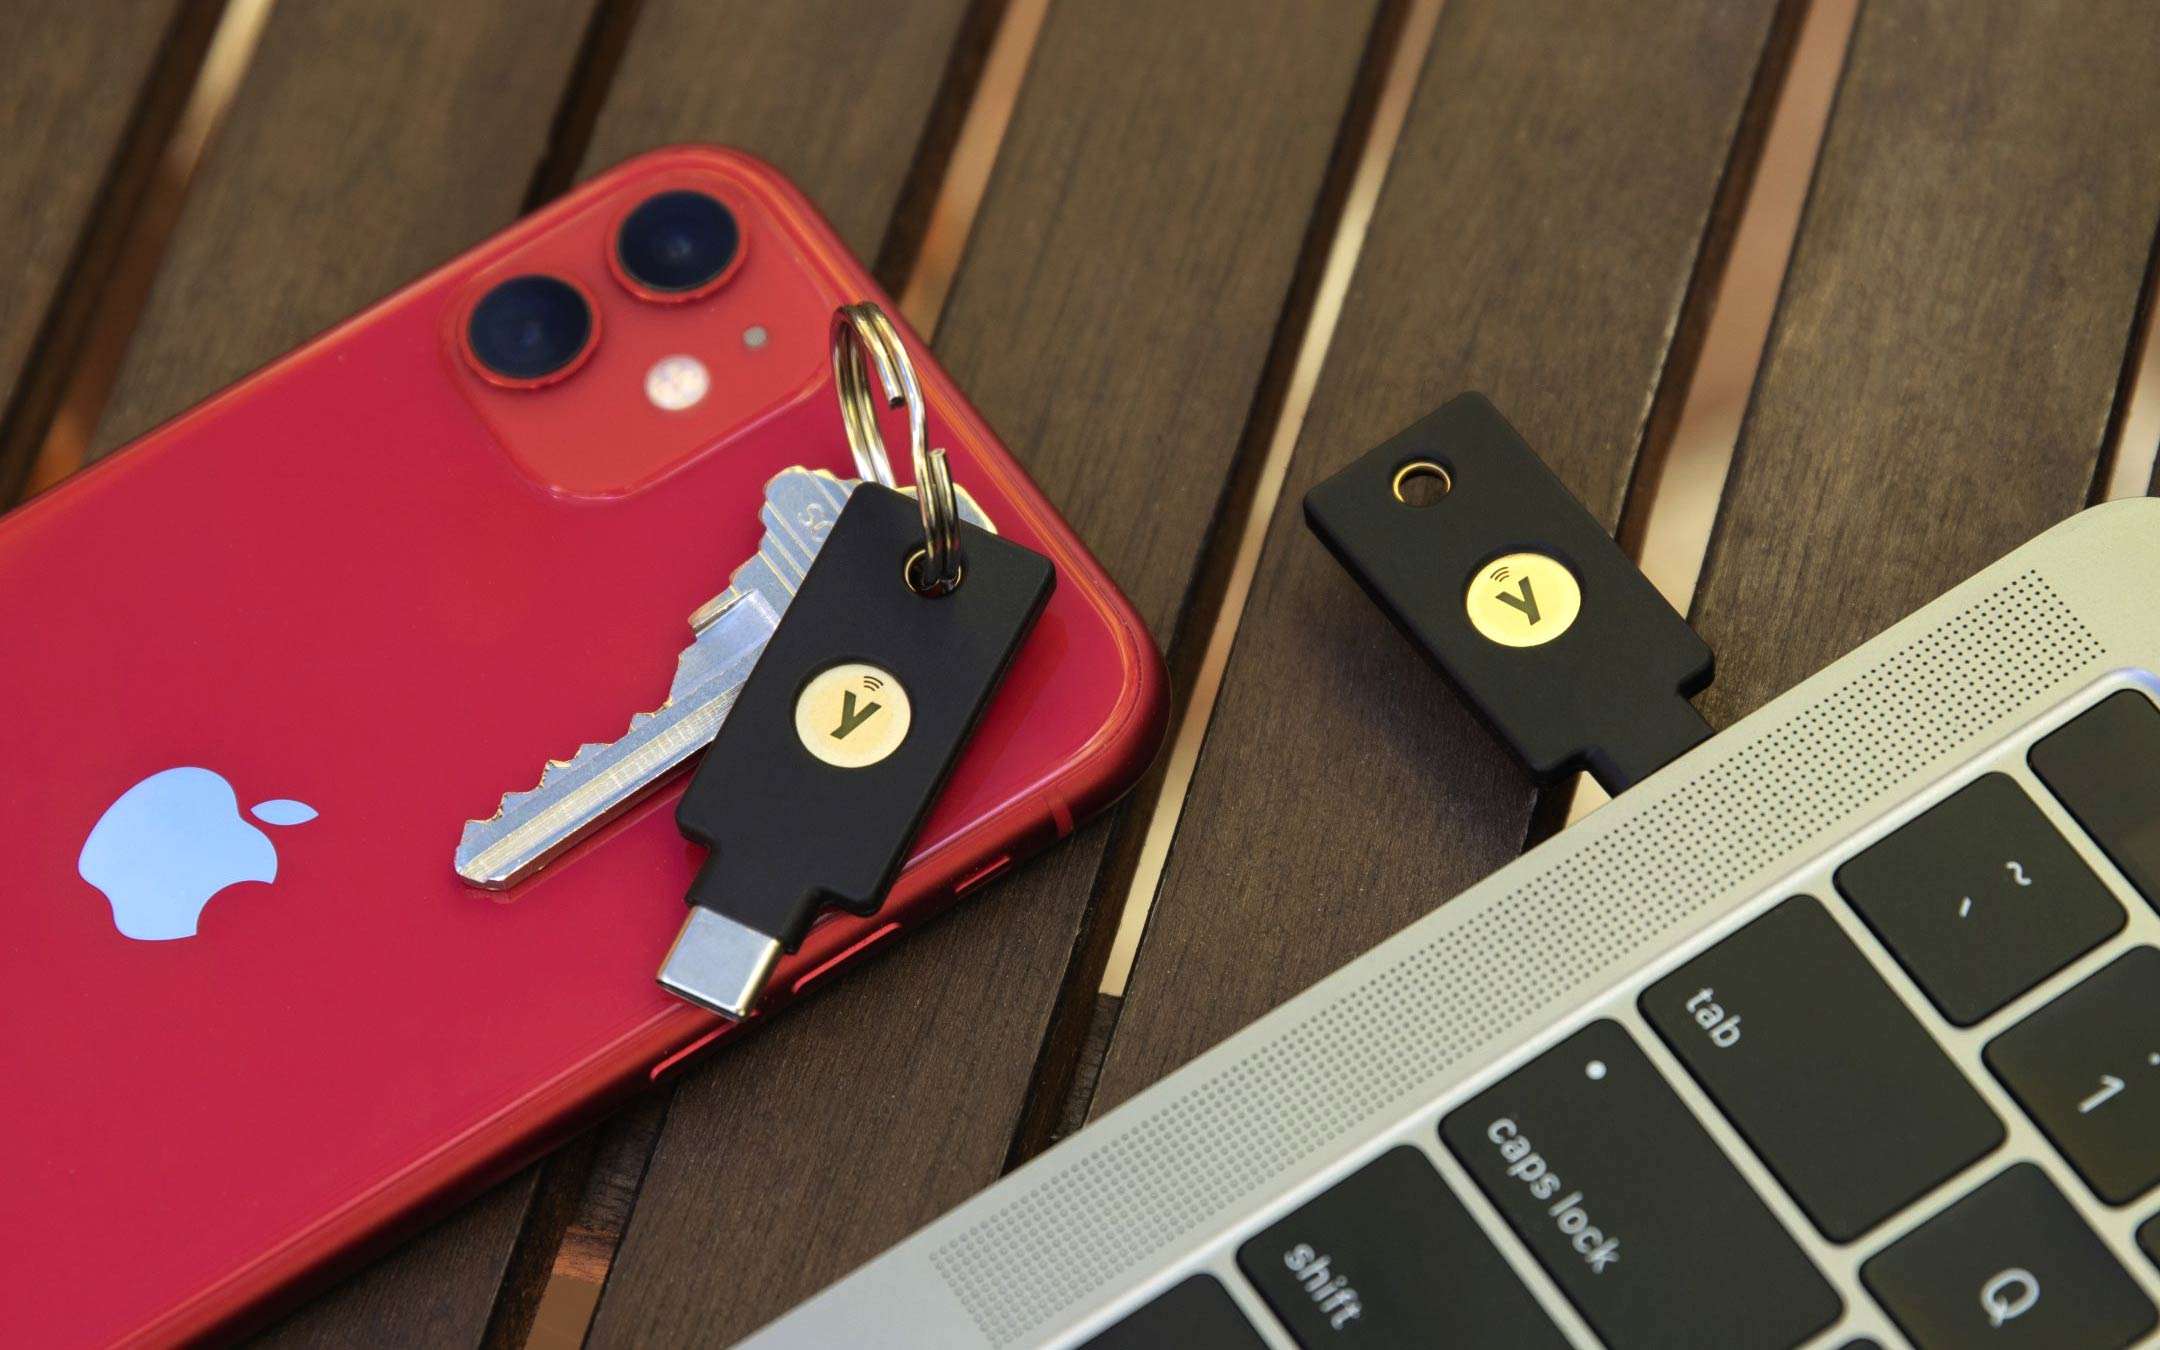 Yubico presents the new YubiKey 5C NFC key